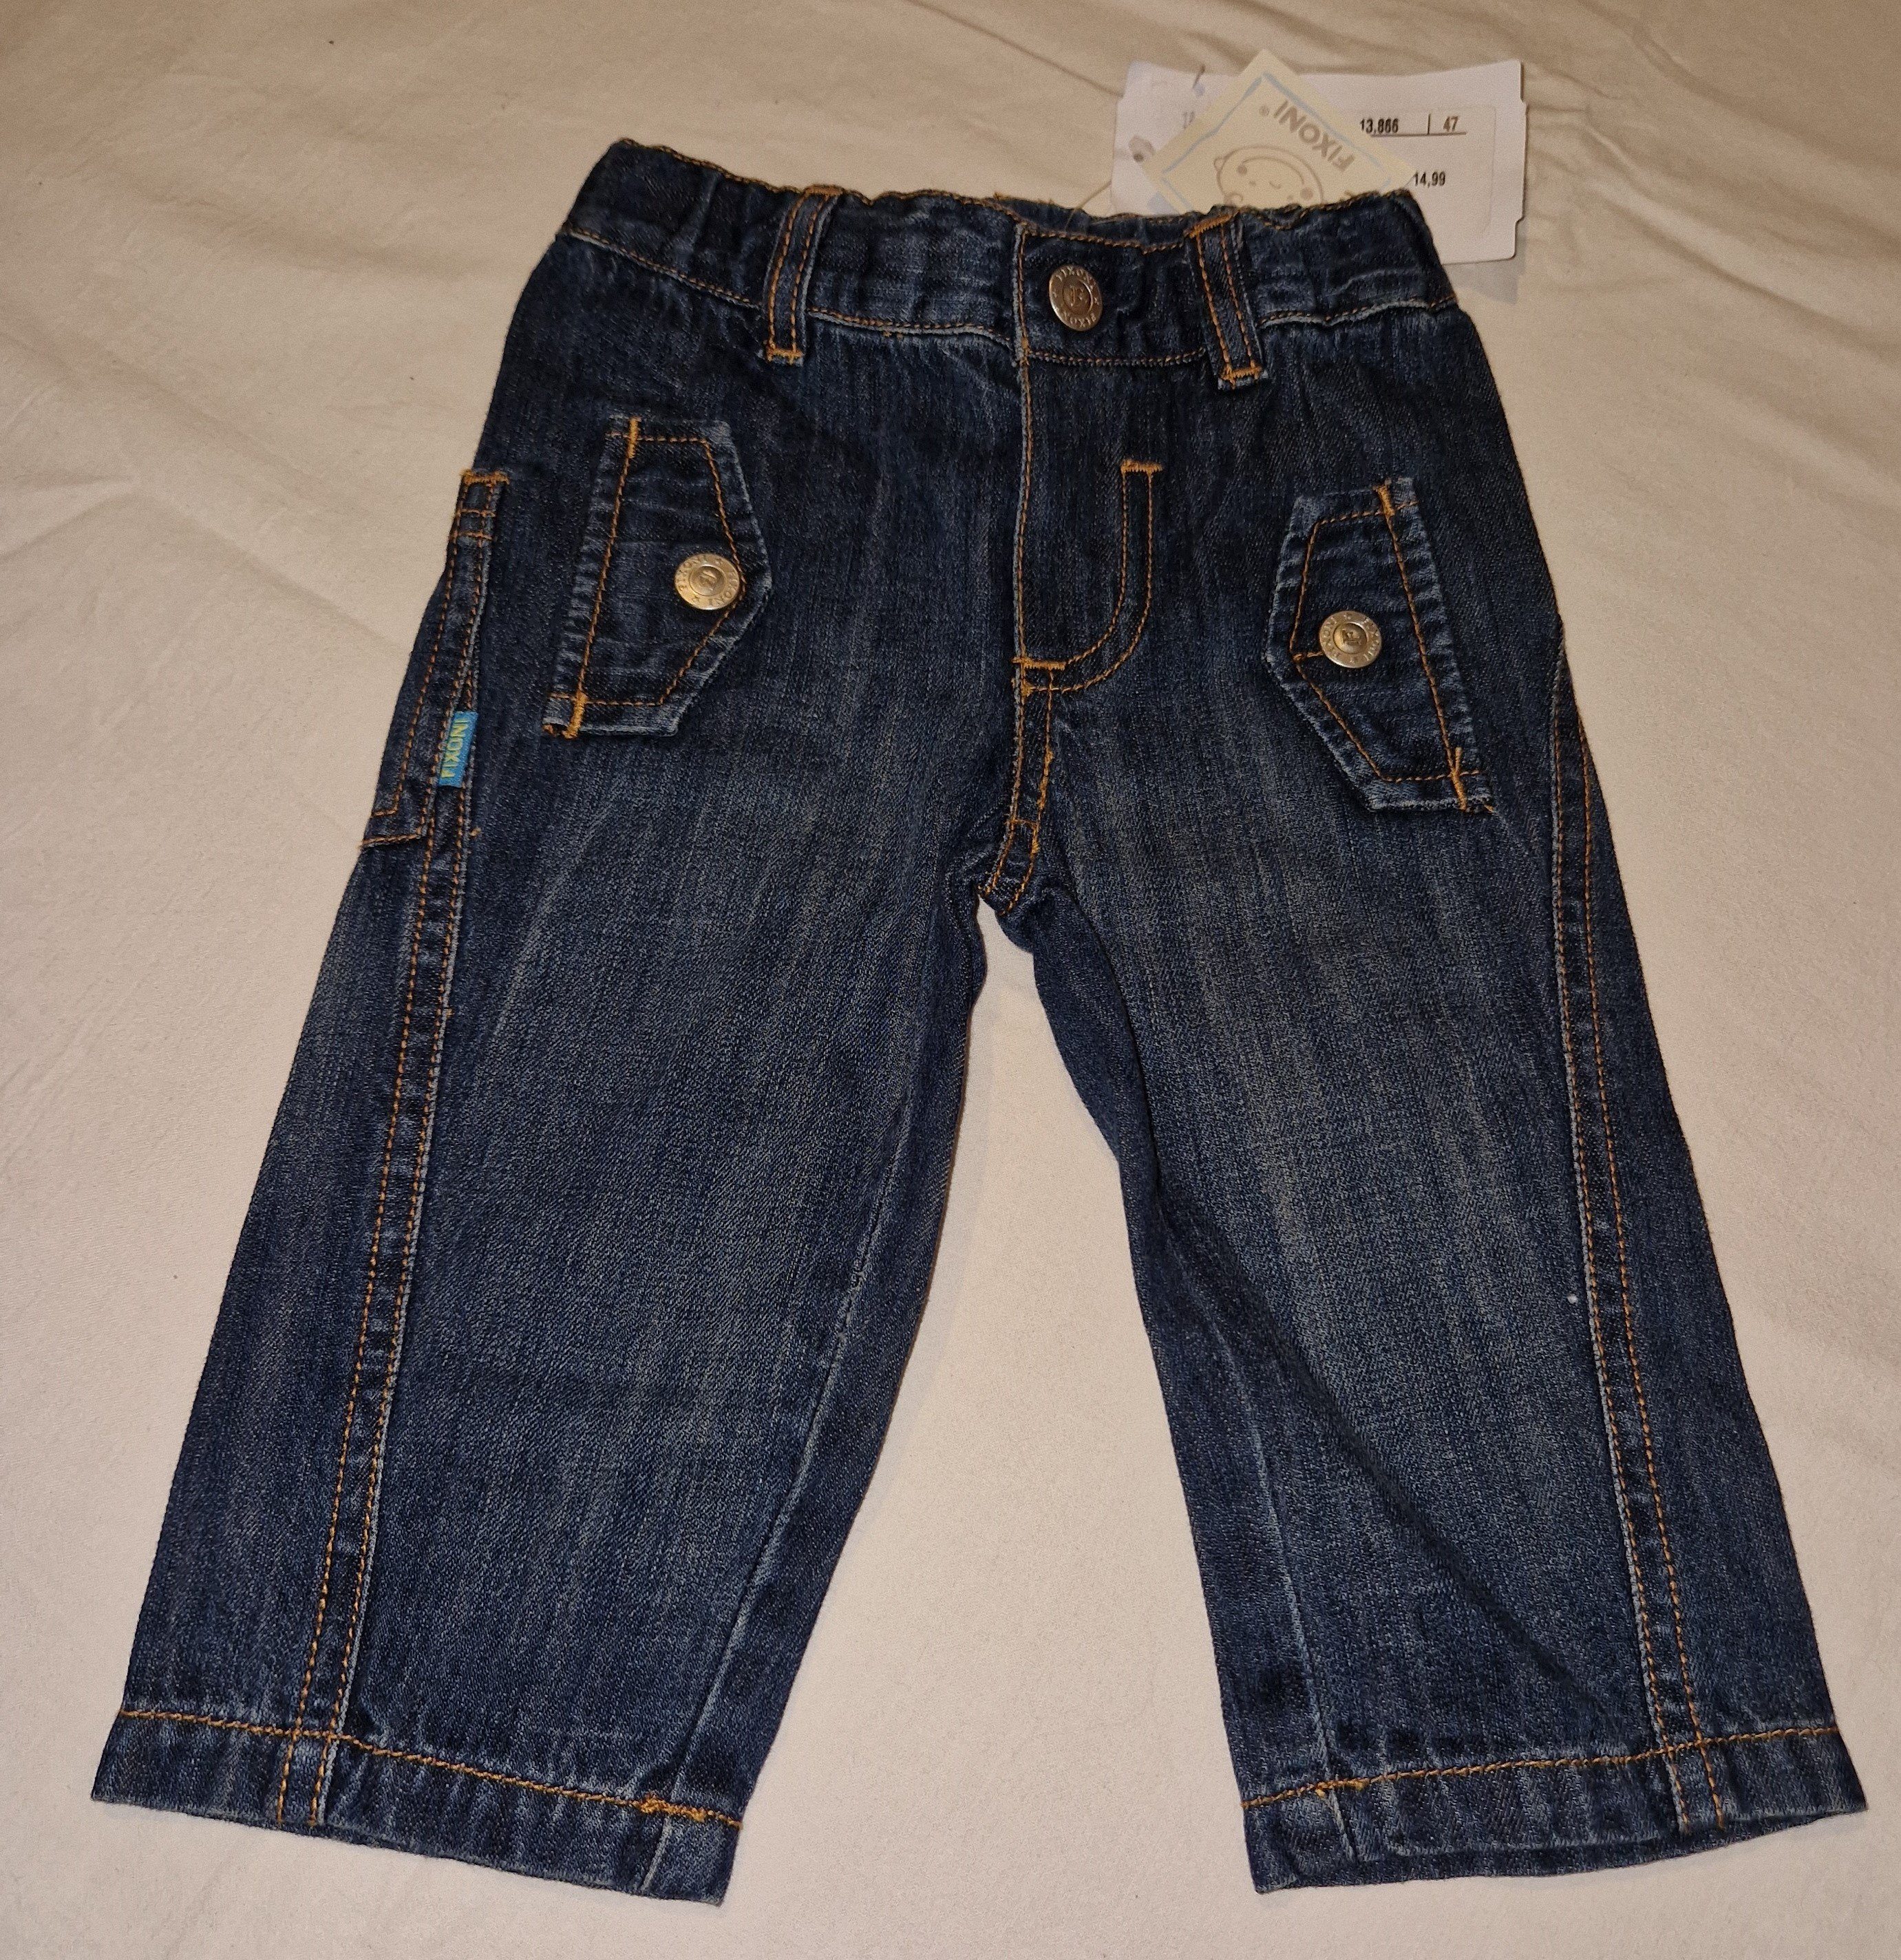 Fixoni Bequeme Jeans Jungen blau Größe 62/68 (2211037)